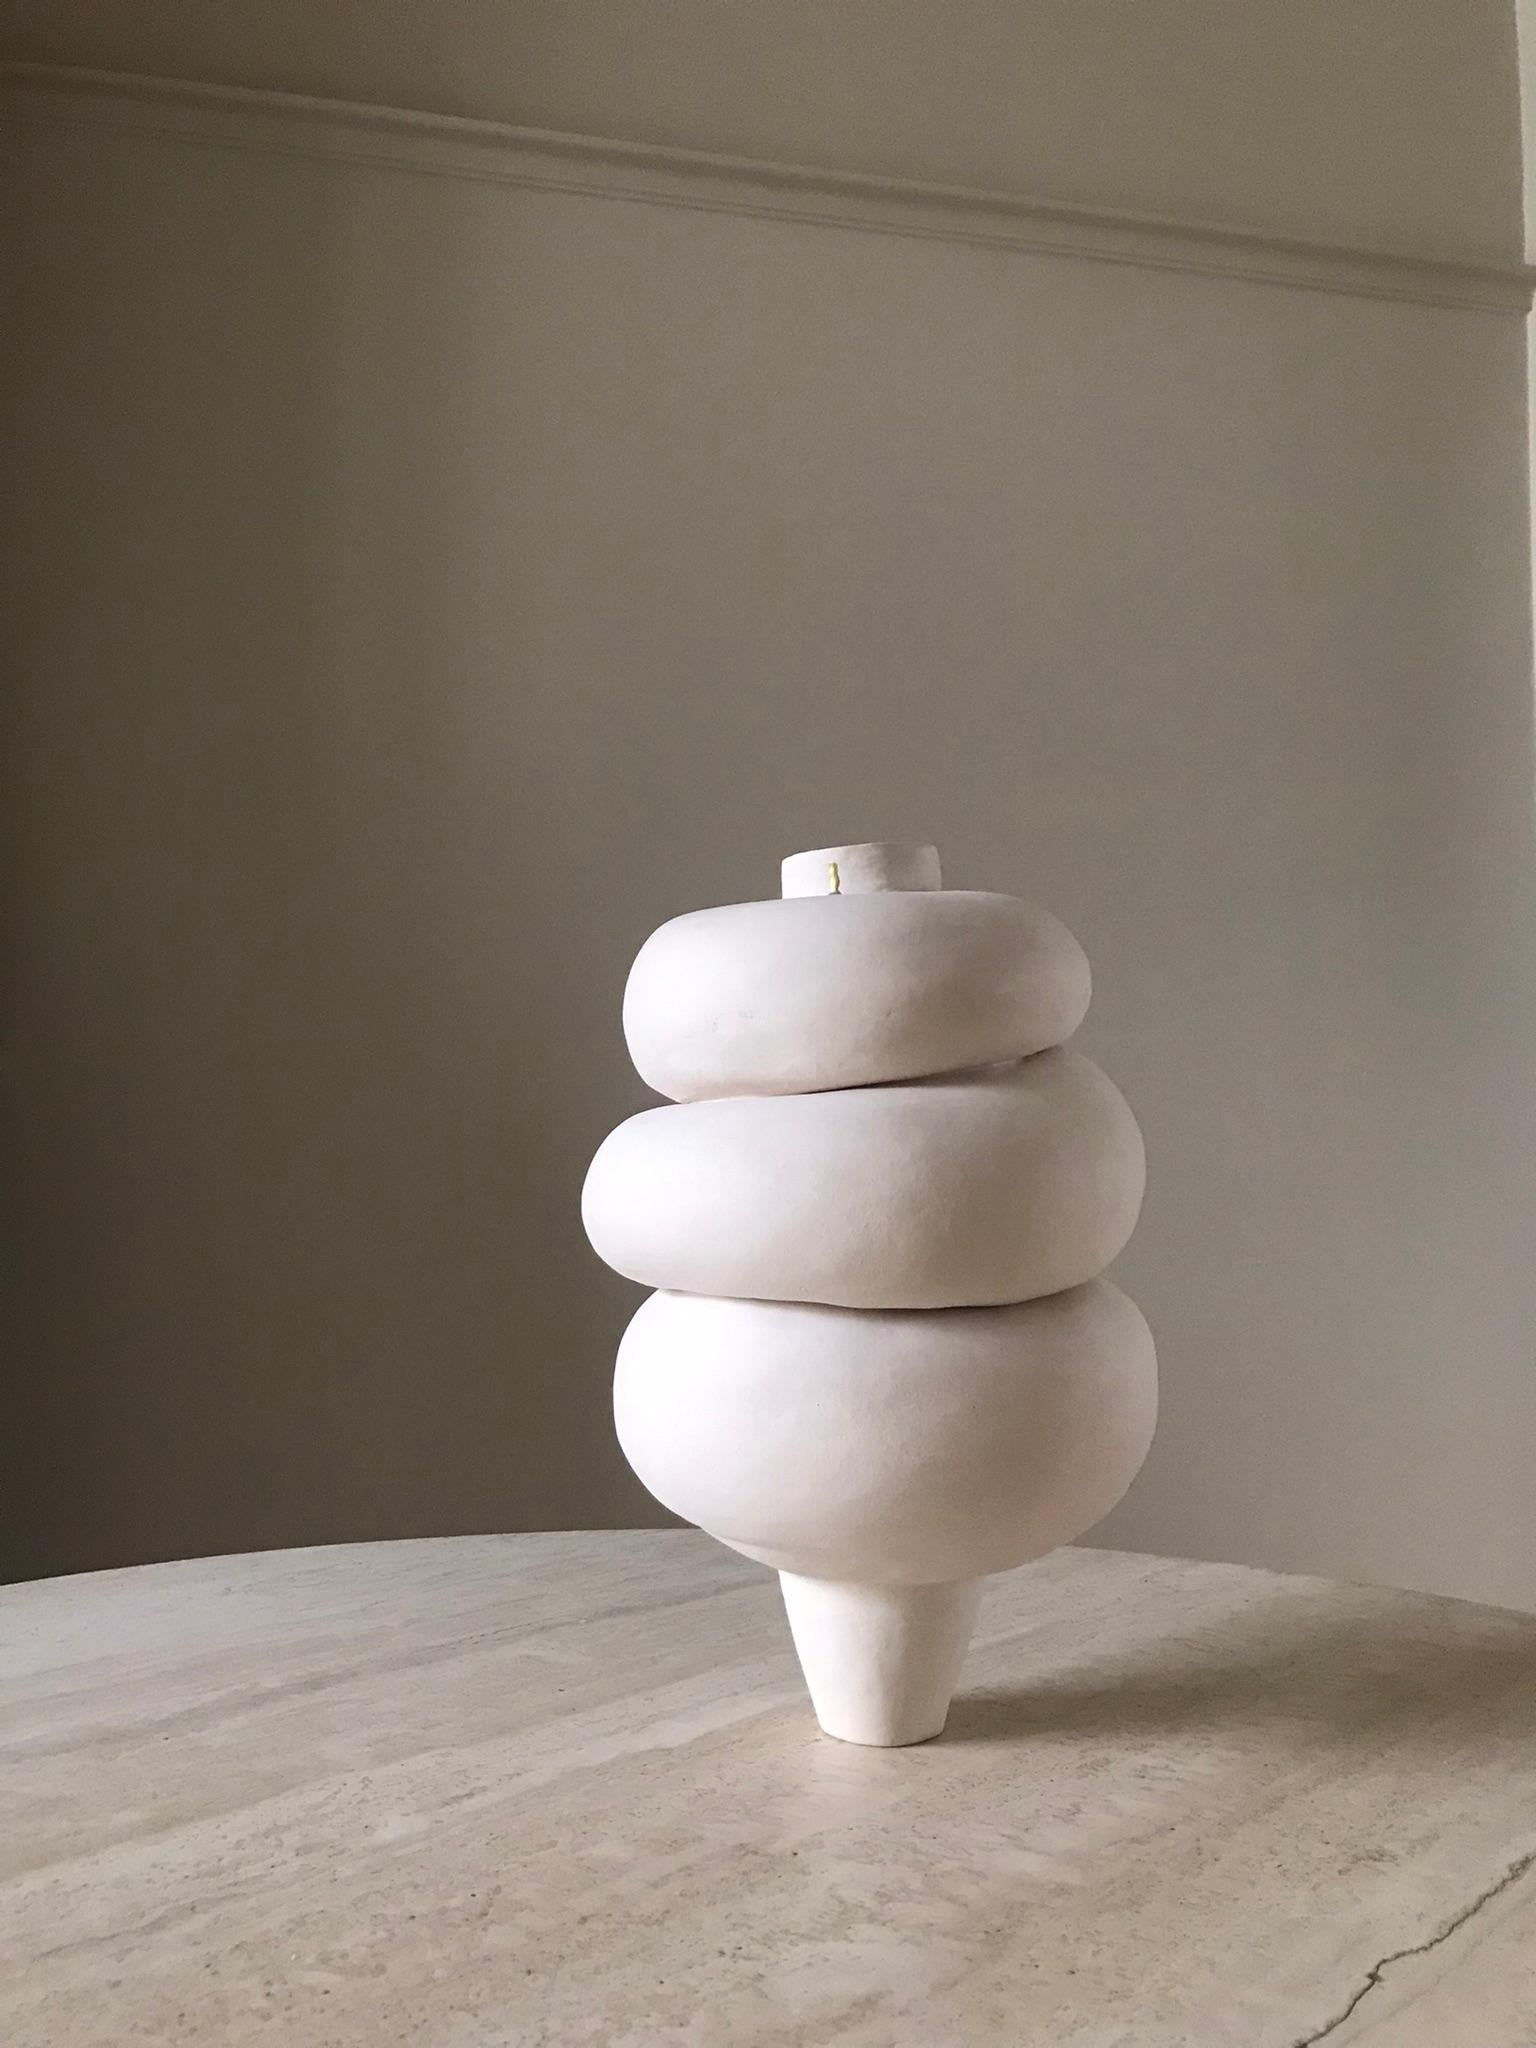 Dutch Contemporary Sculptural Ceramic Art Modder Calmness by Françoise Jeffrey For Sale 1